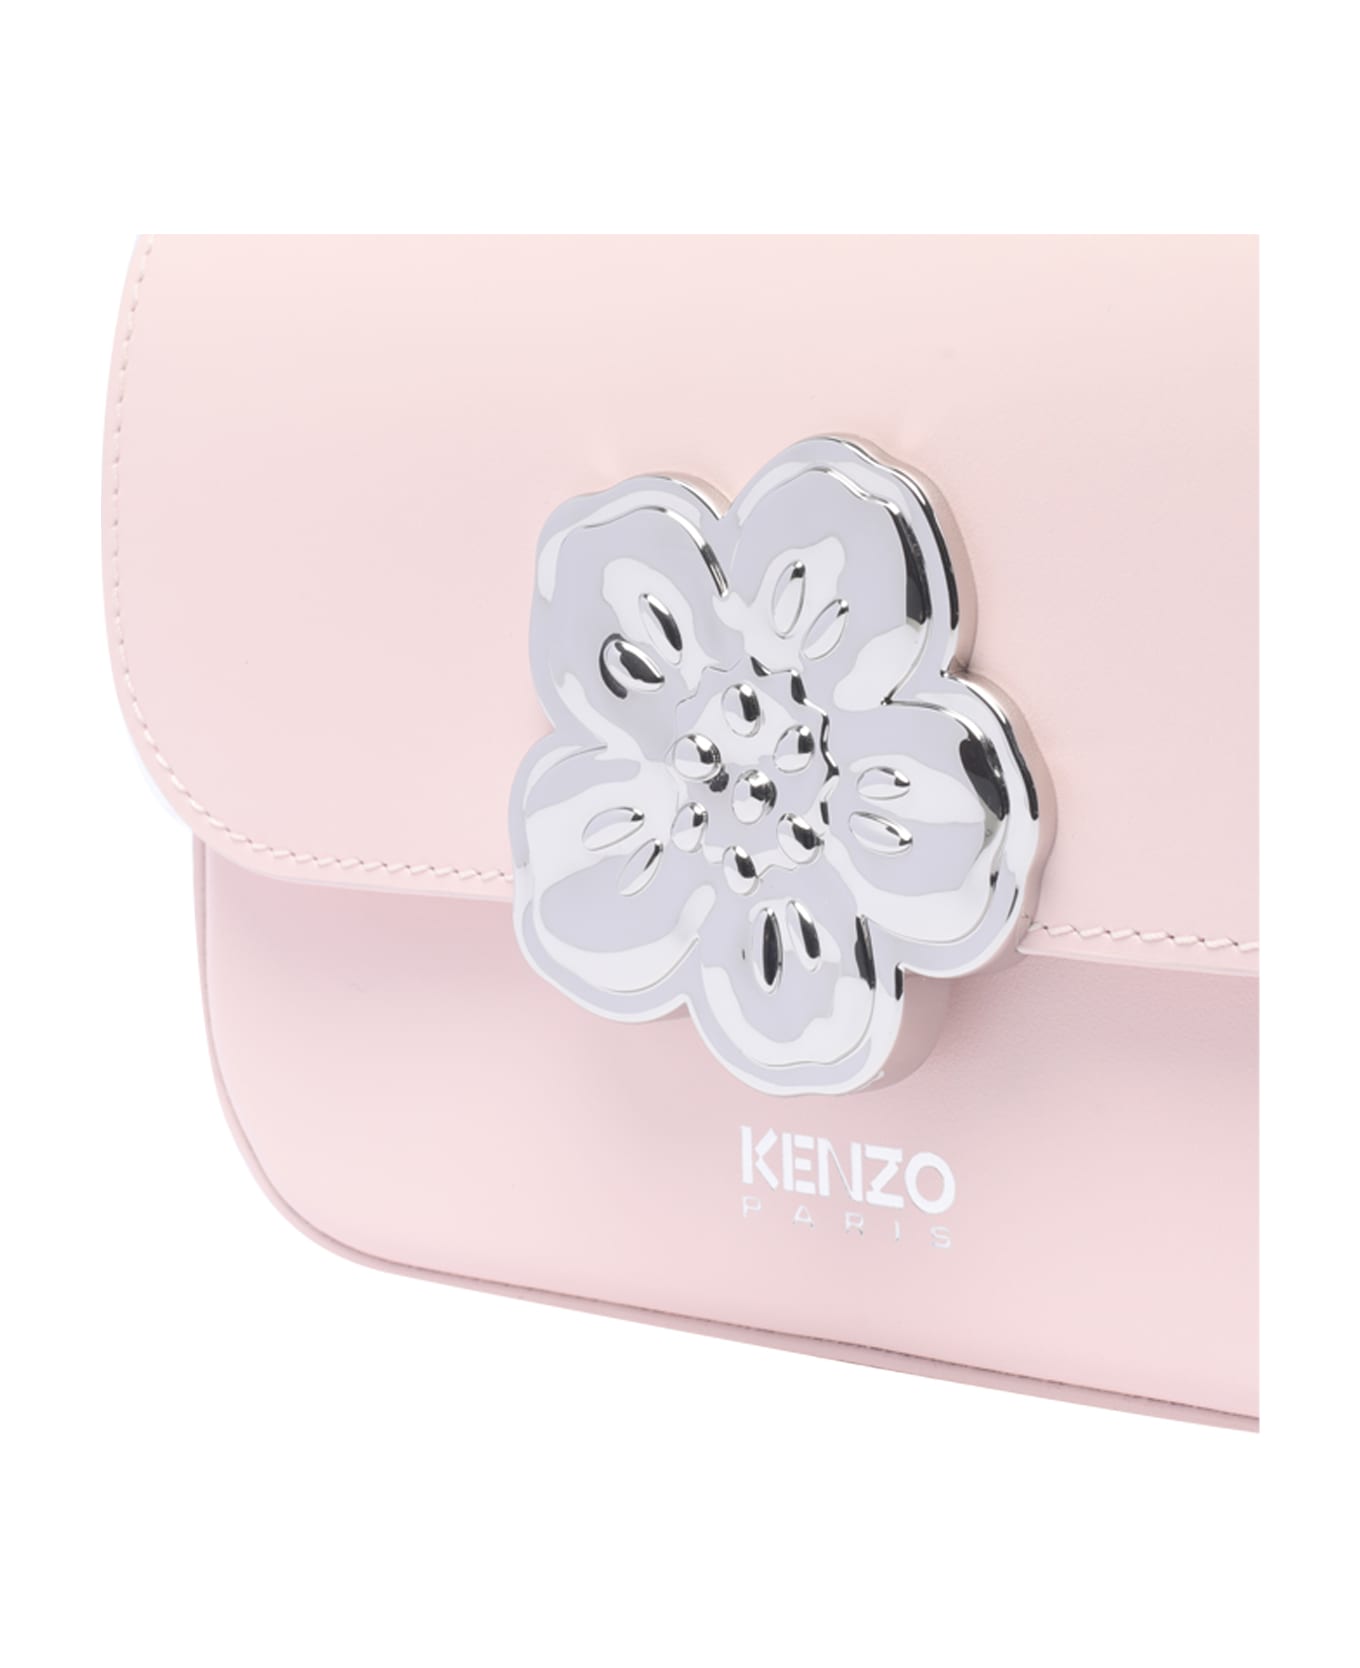 Kenzo Boke Shoulder Bag - Pink